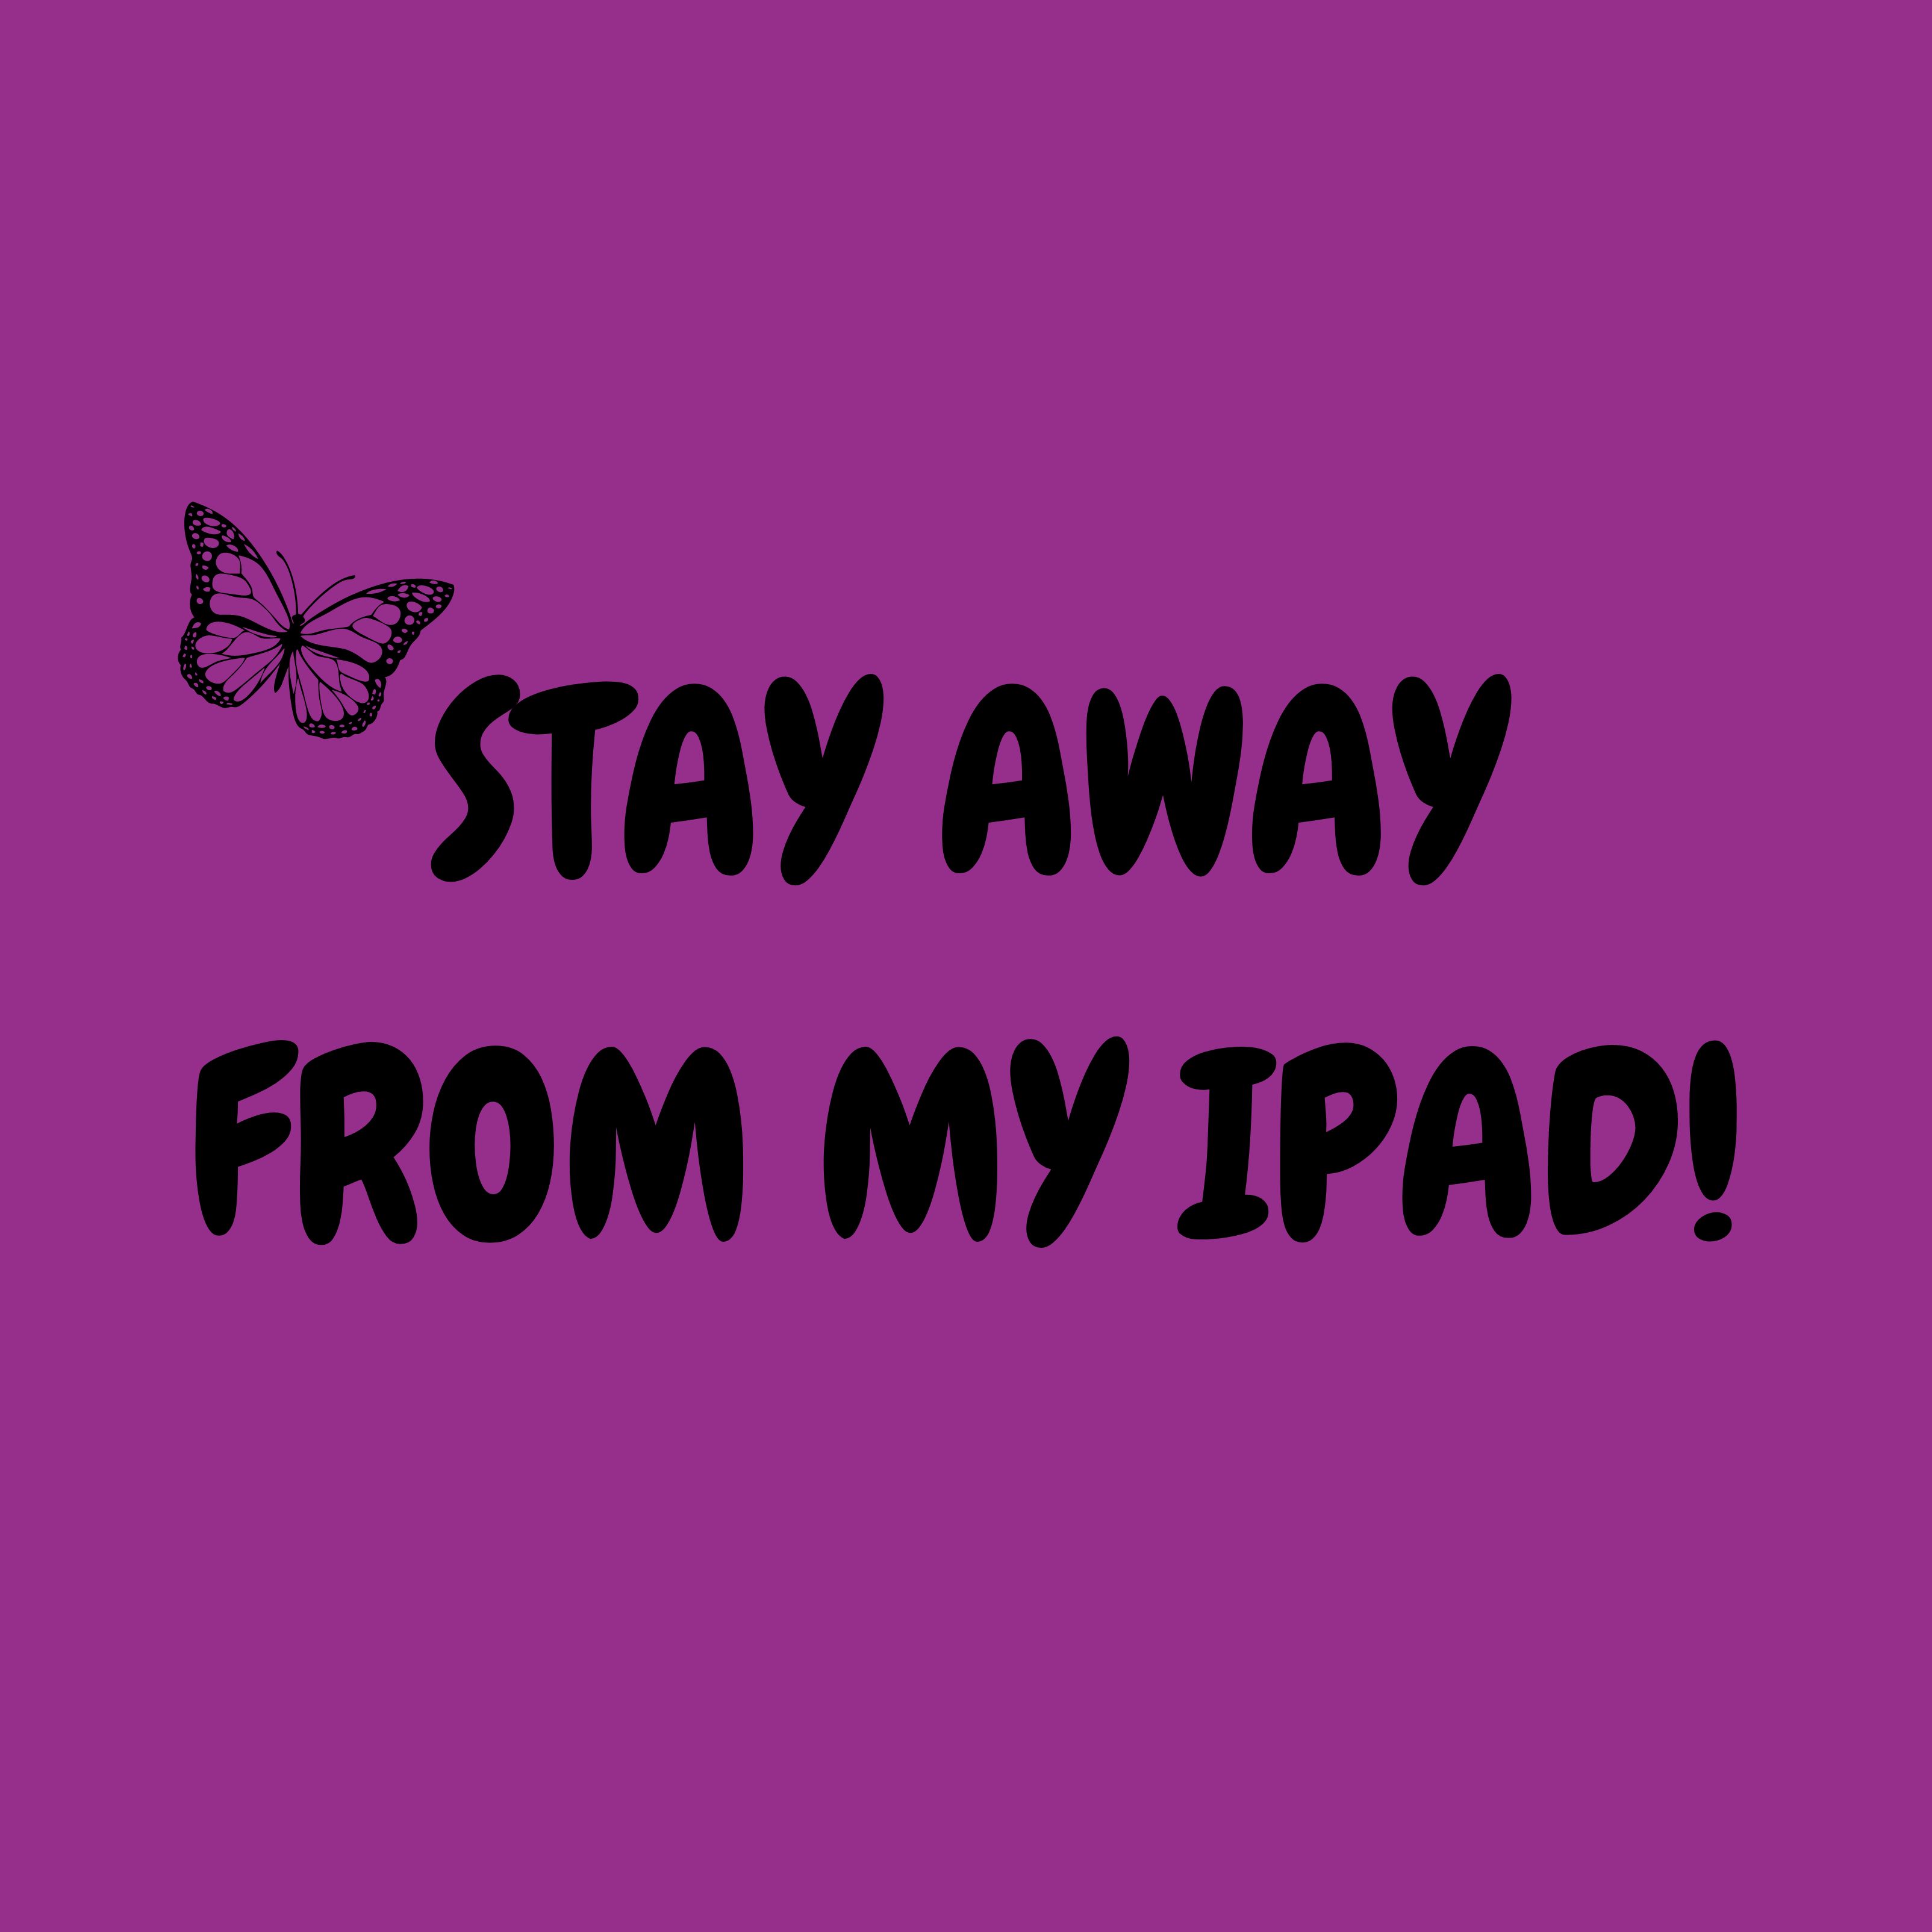 iPad Wallpapers Stay Away From My Ipad Sign Ipad Wallpaper 3208x3208 px